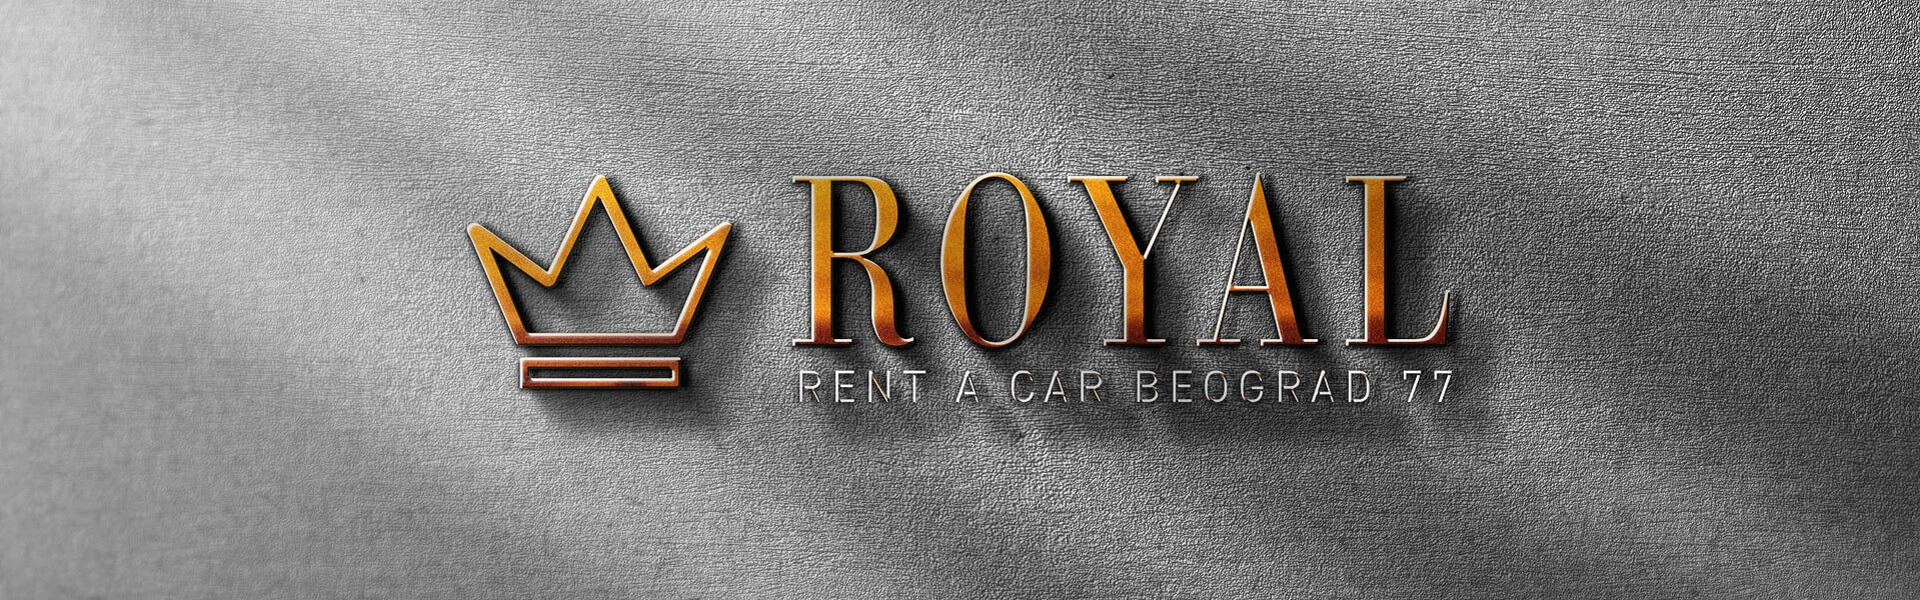 Sprej za nos | Rent a car Beograd Royal